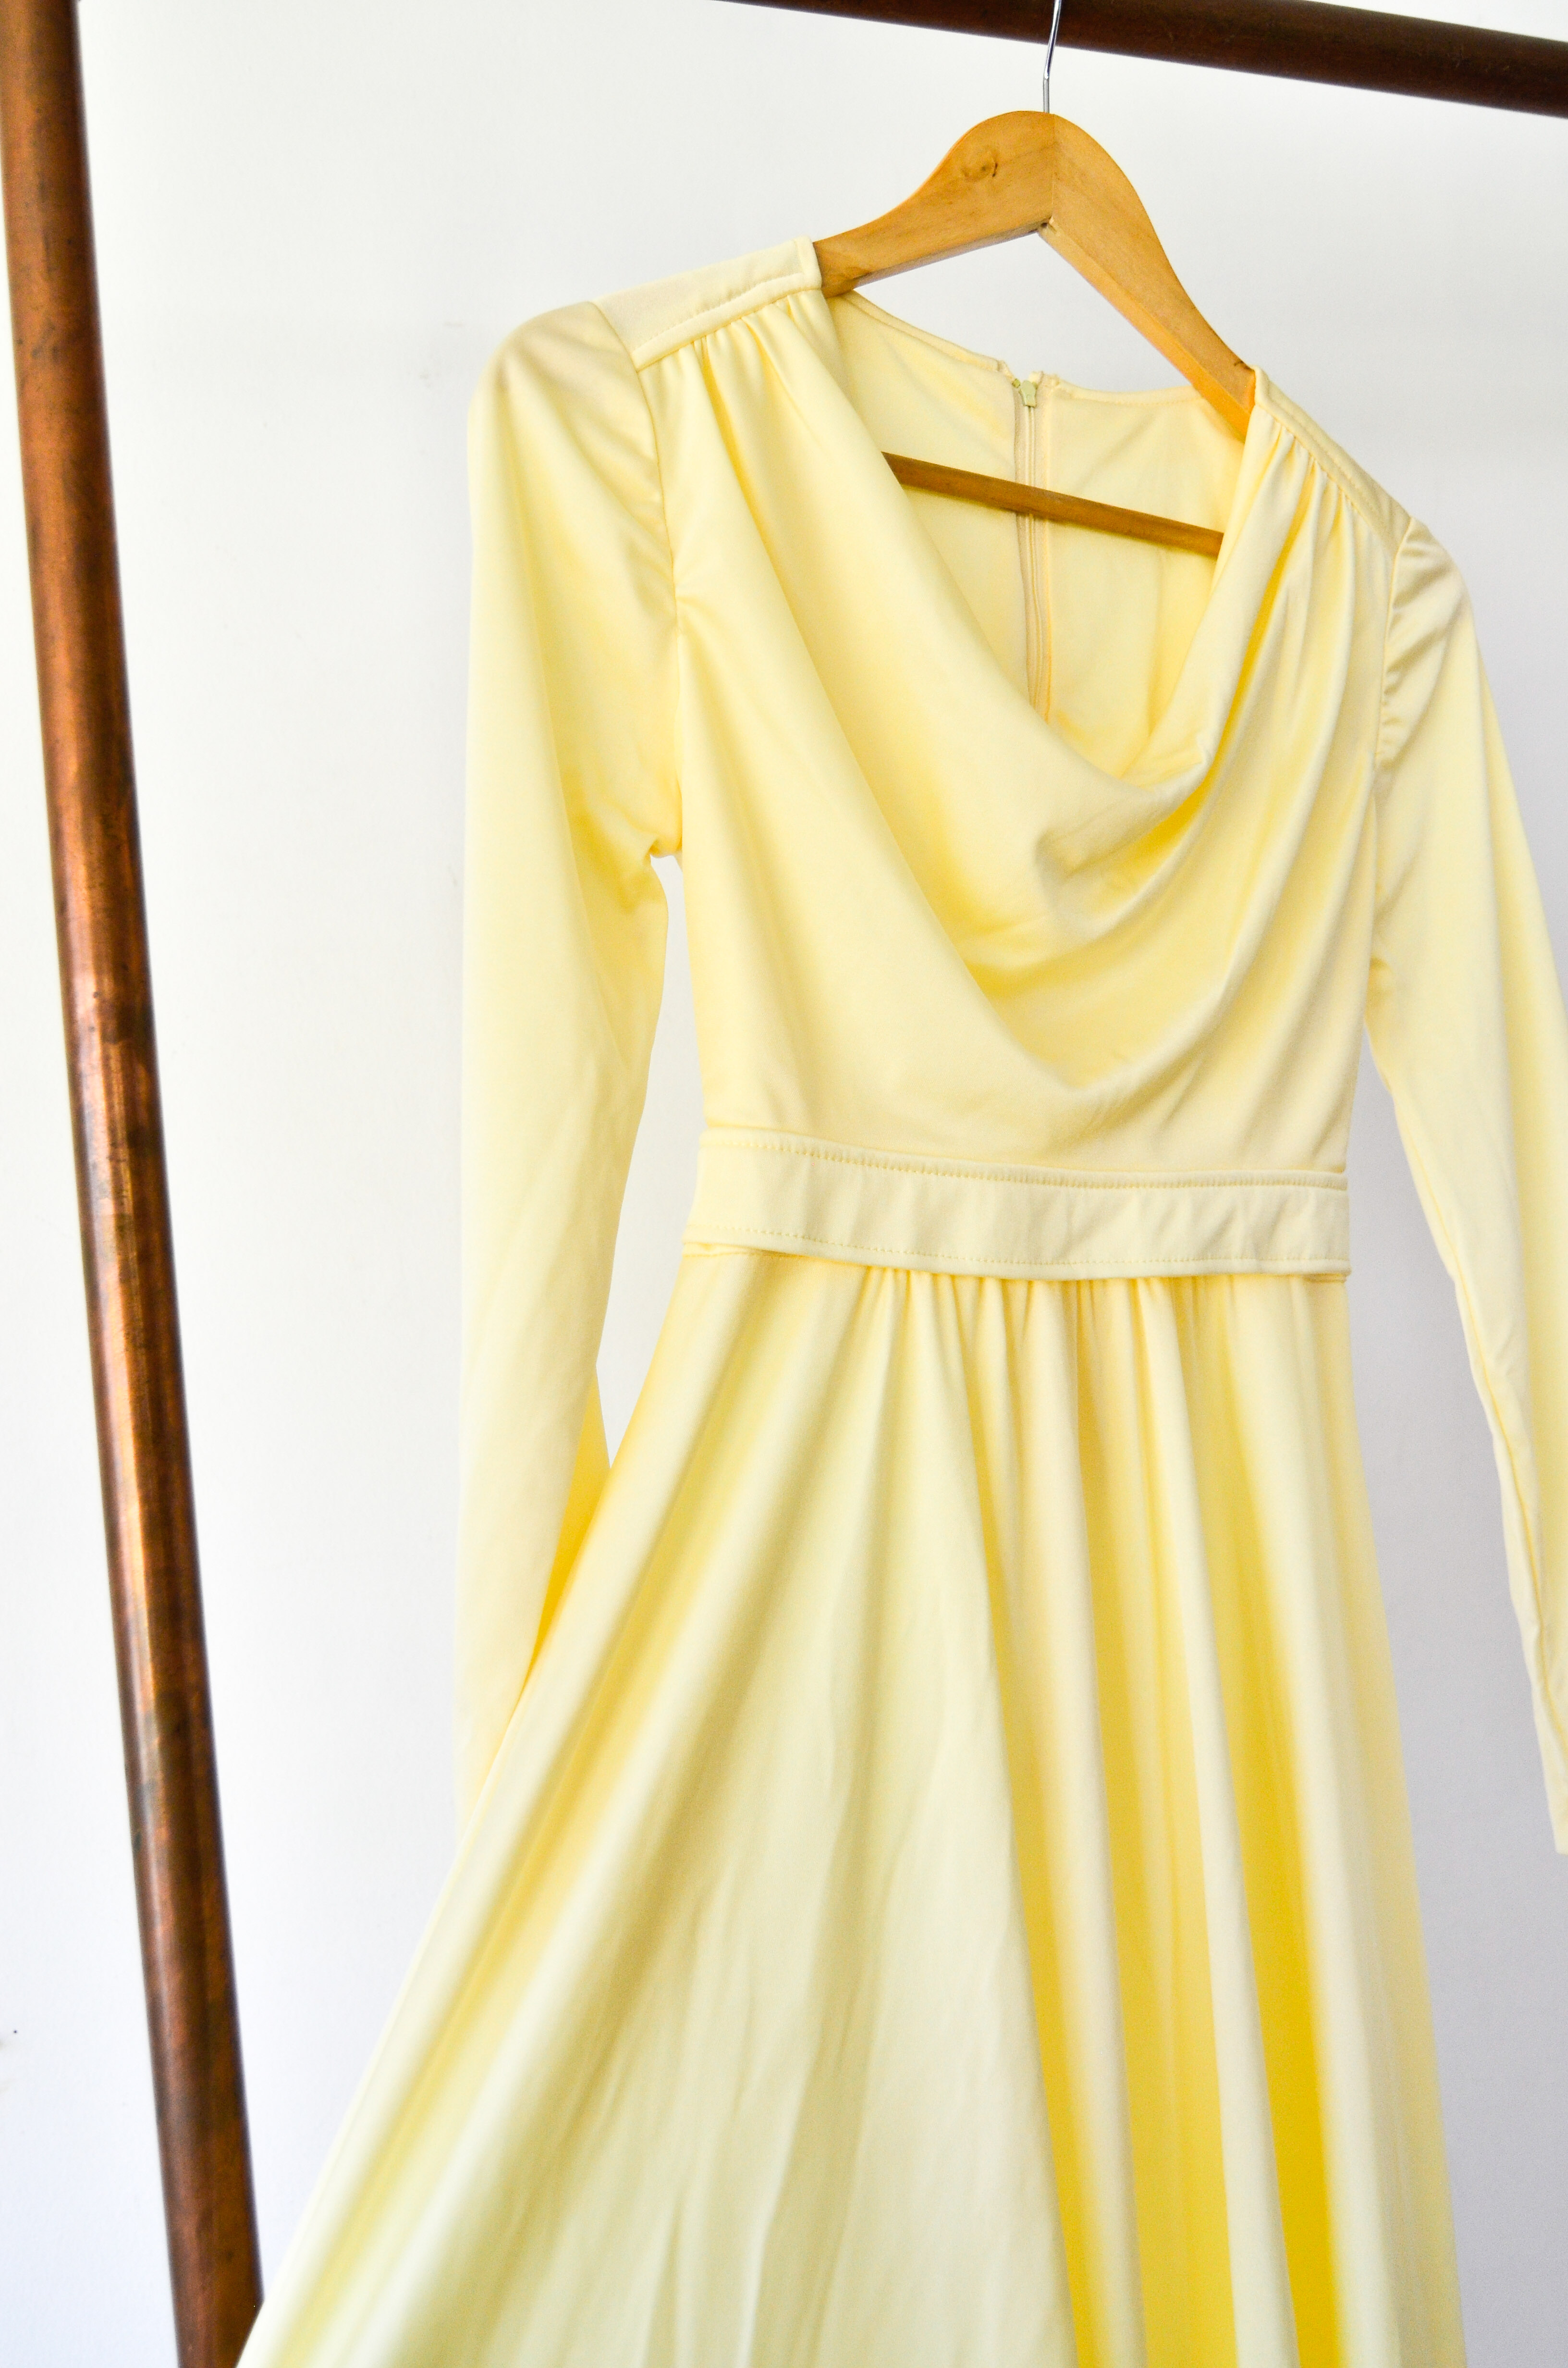 Vestido amarillo 70s vntg